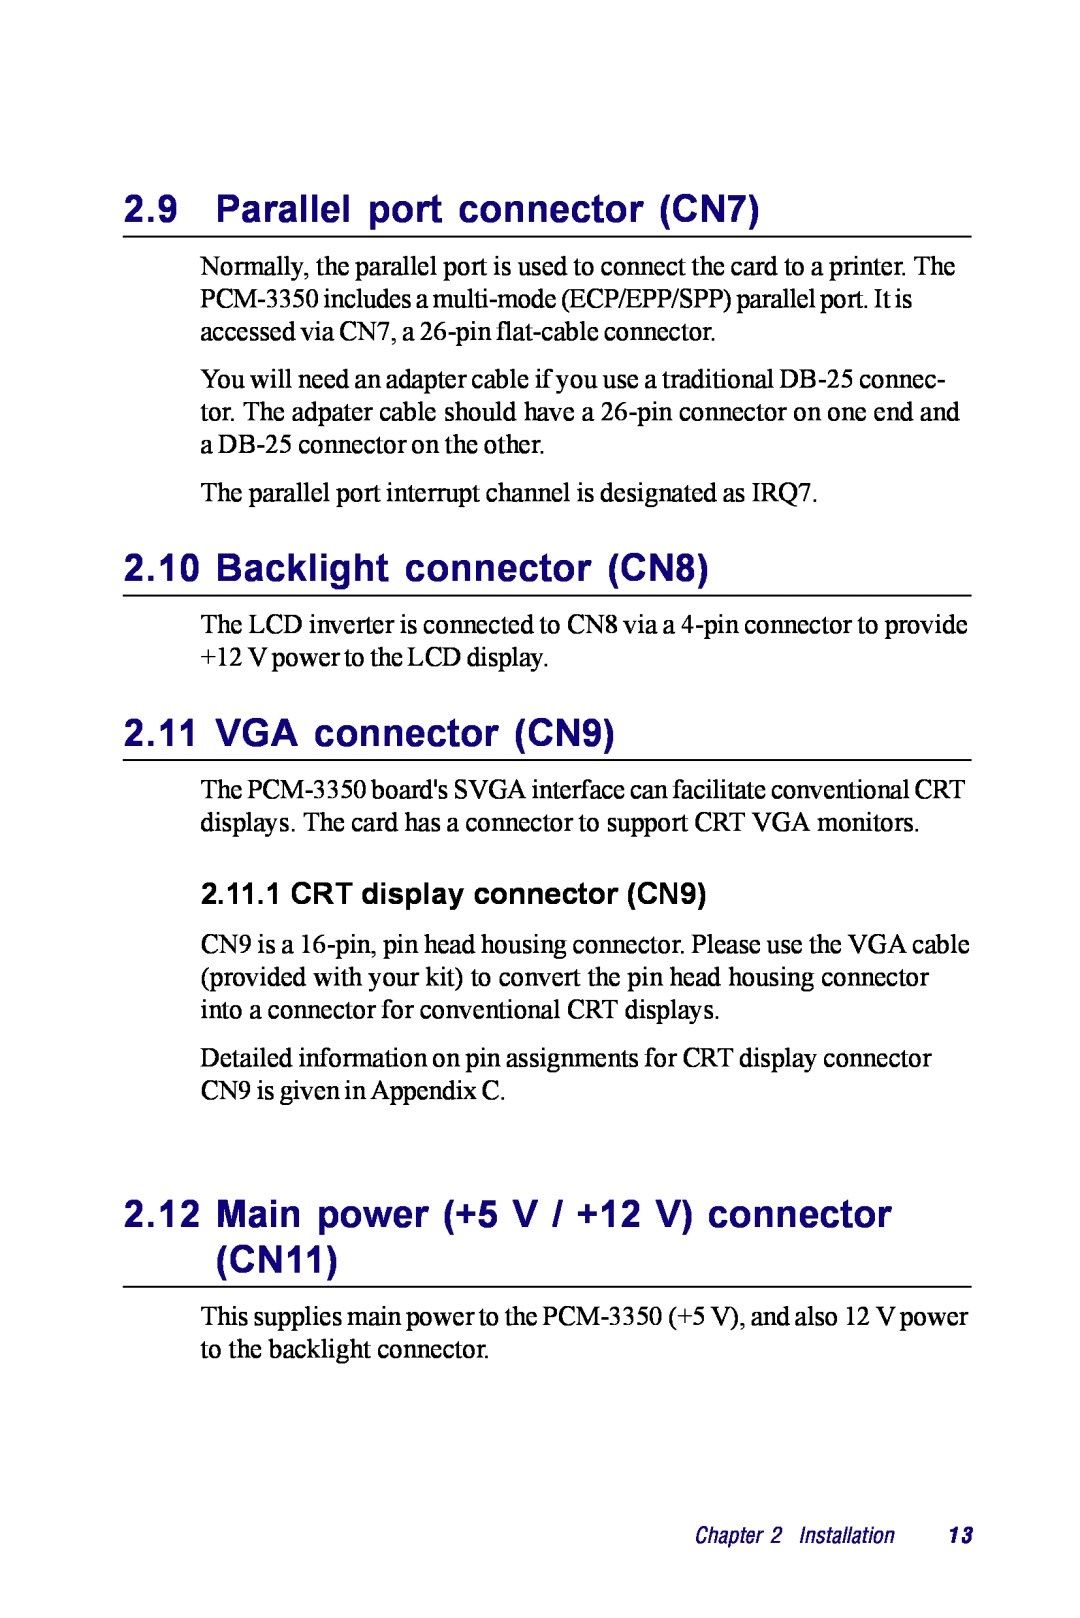 Advantech PCM-3350 Series user manual Parallel port connector CN7, Backlight connector CN8, VGA connector CN9 